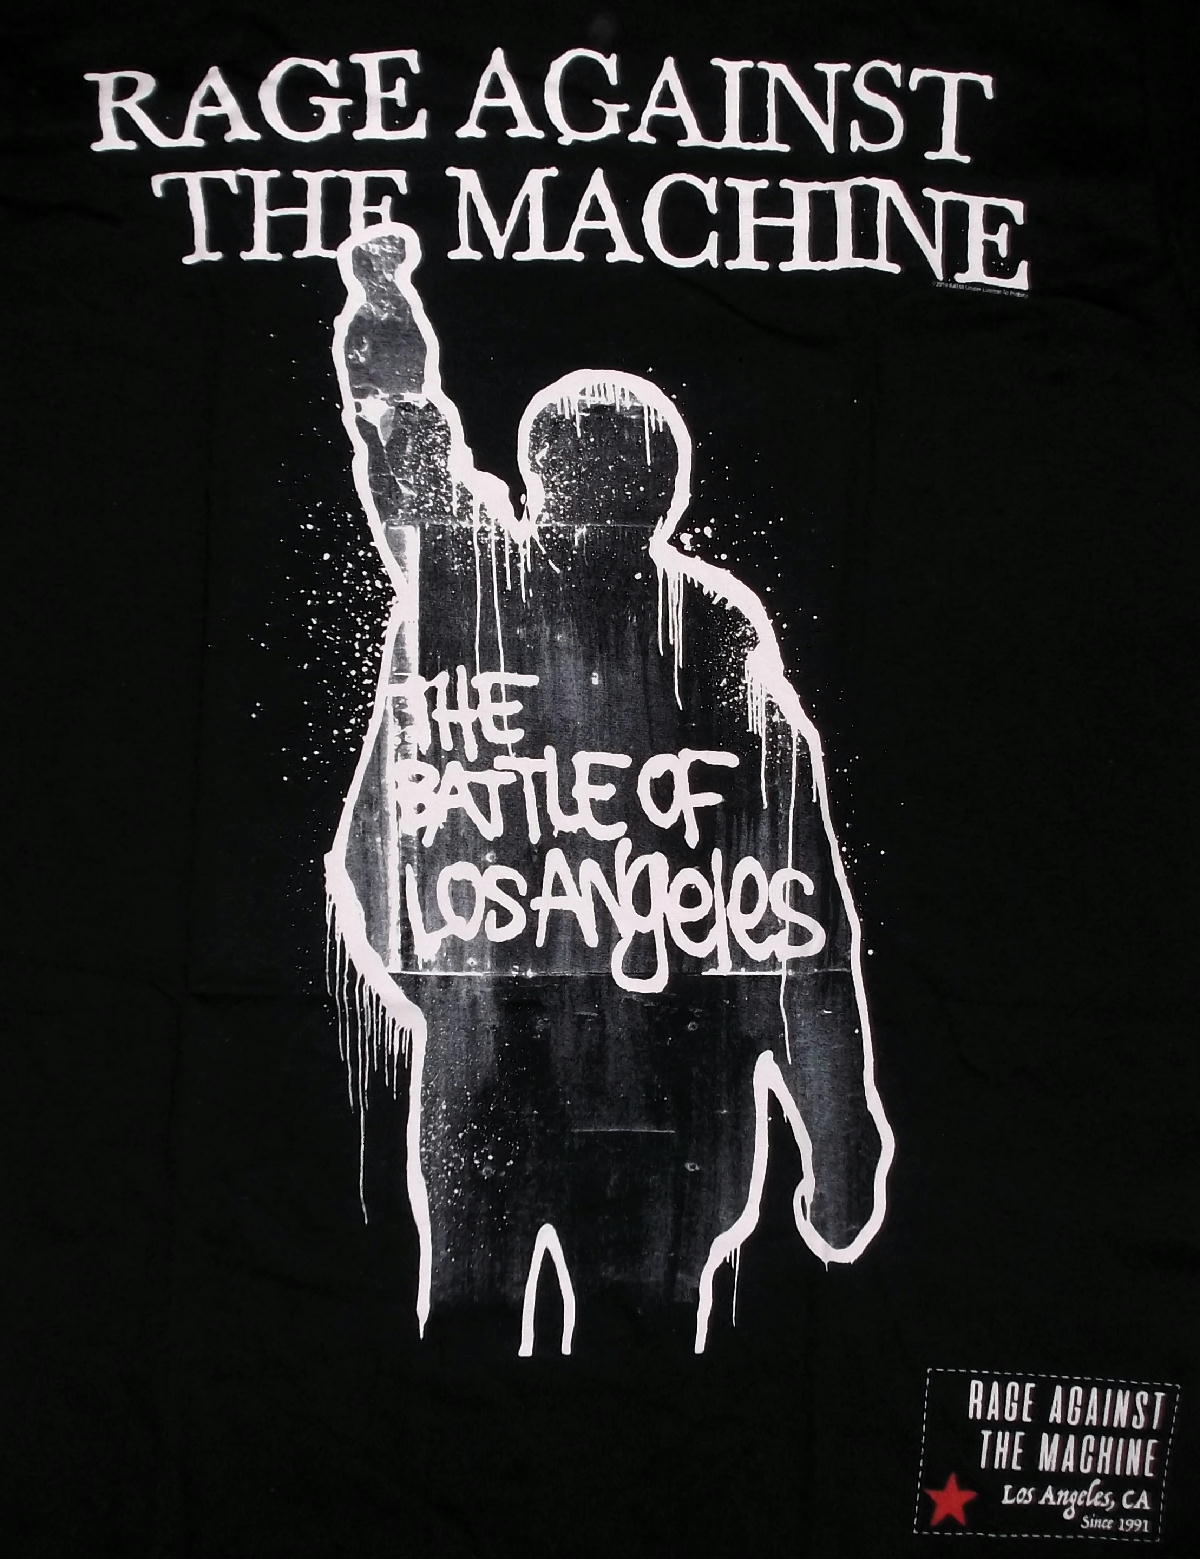 Rage against the machineバンドロックTシャツミクスチャー